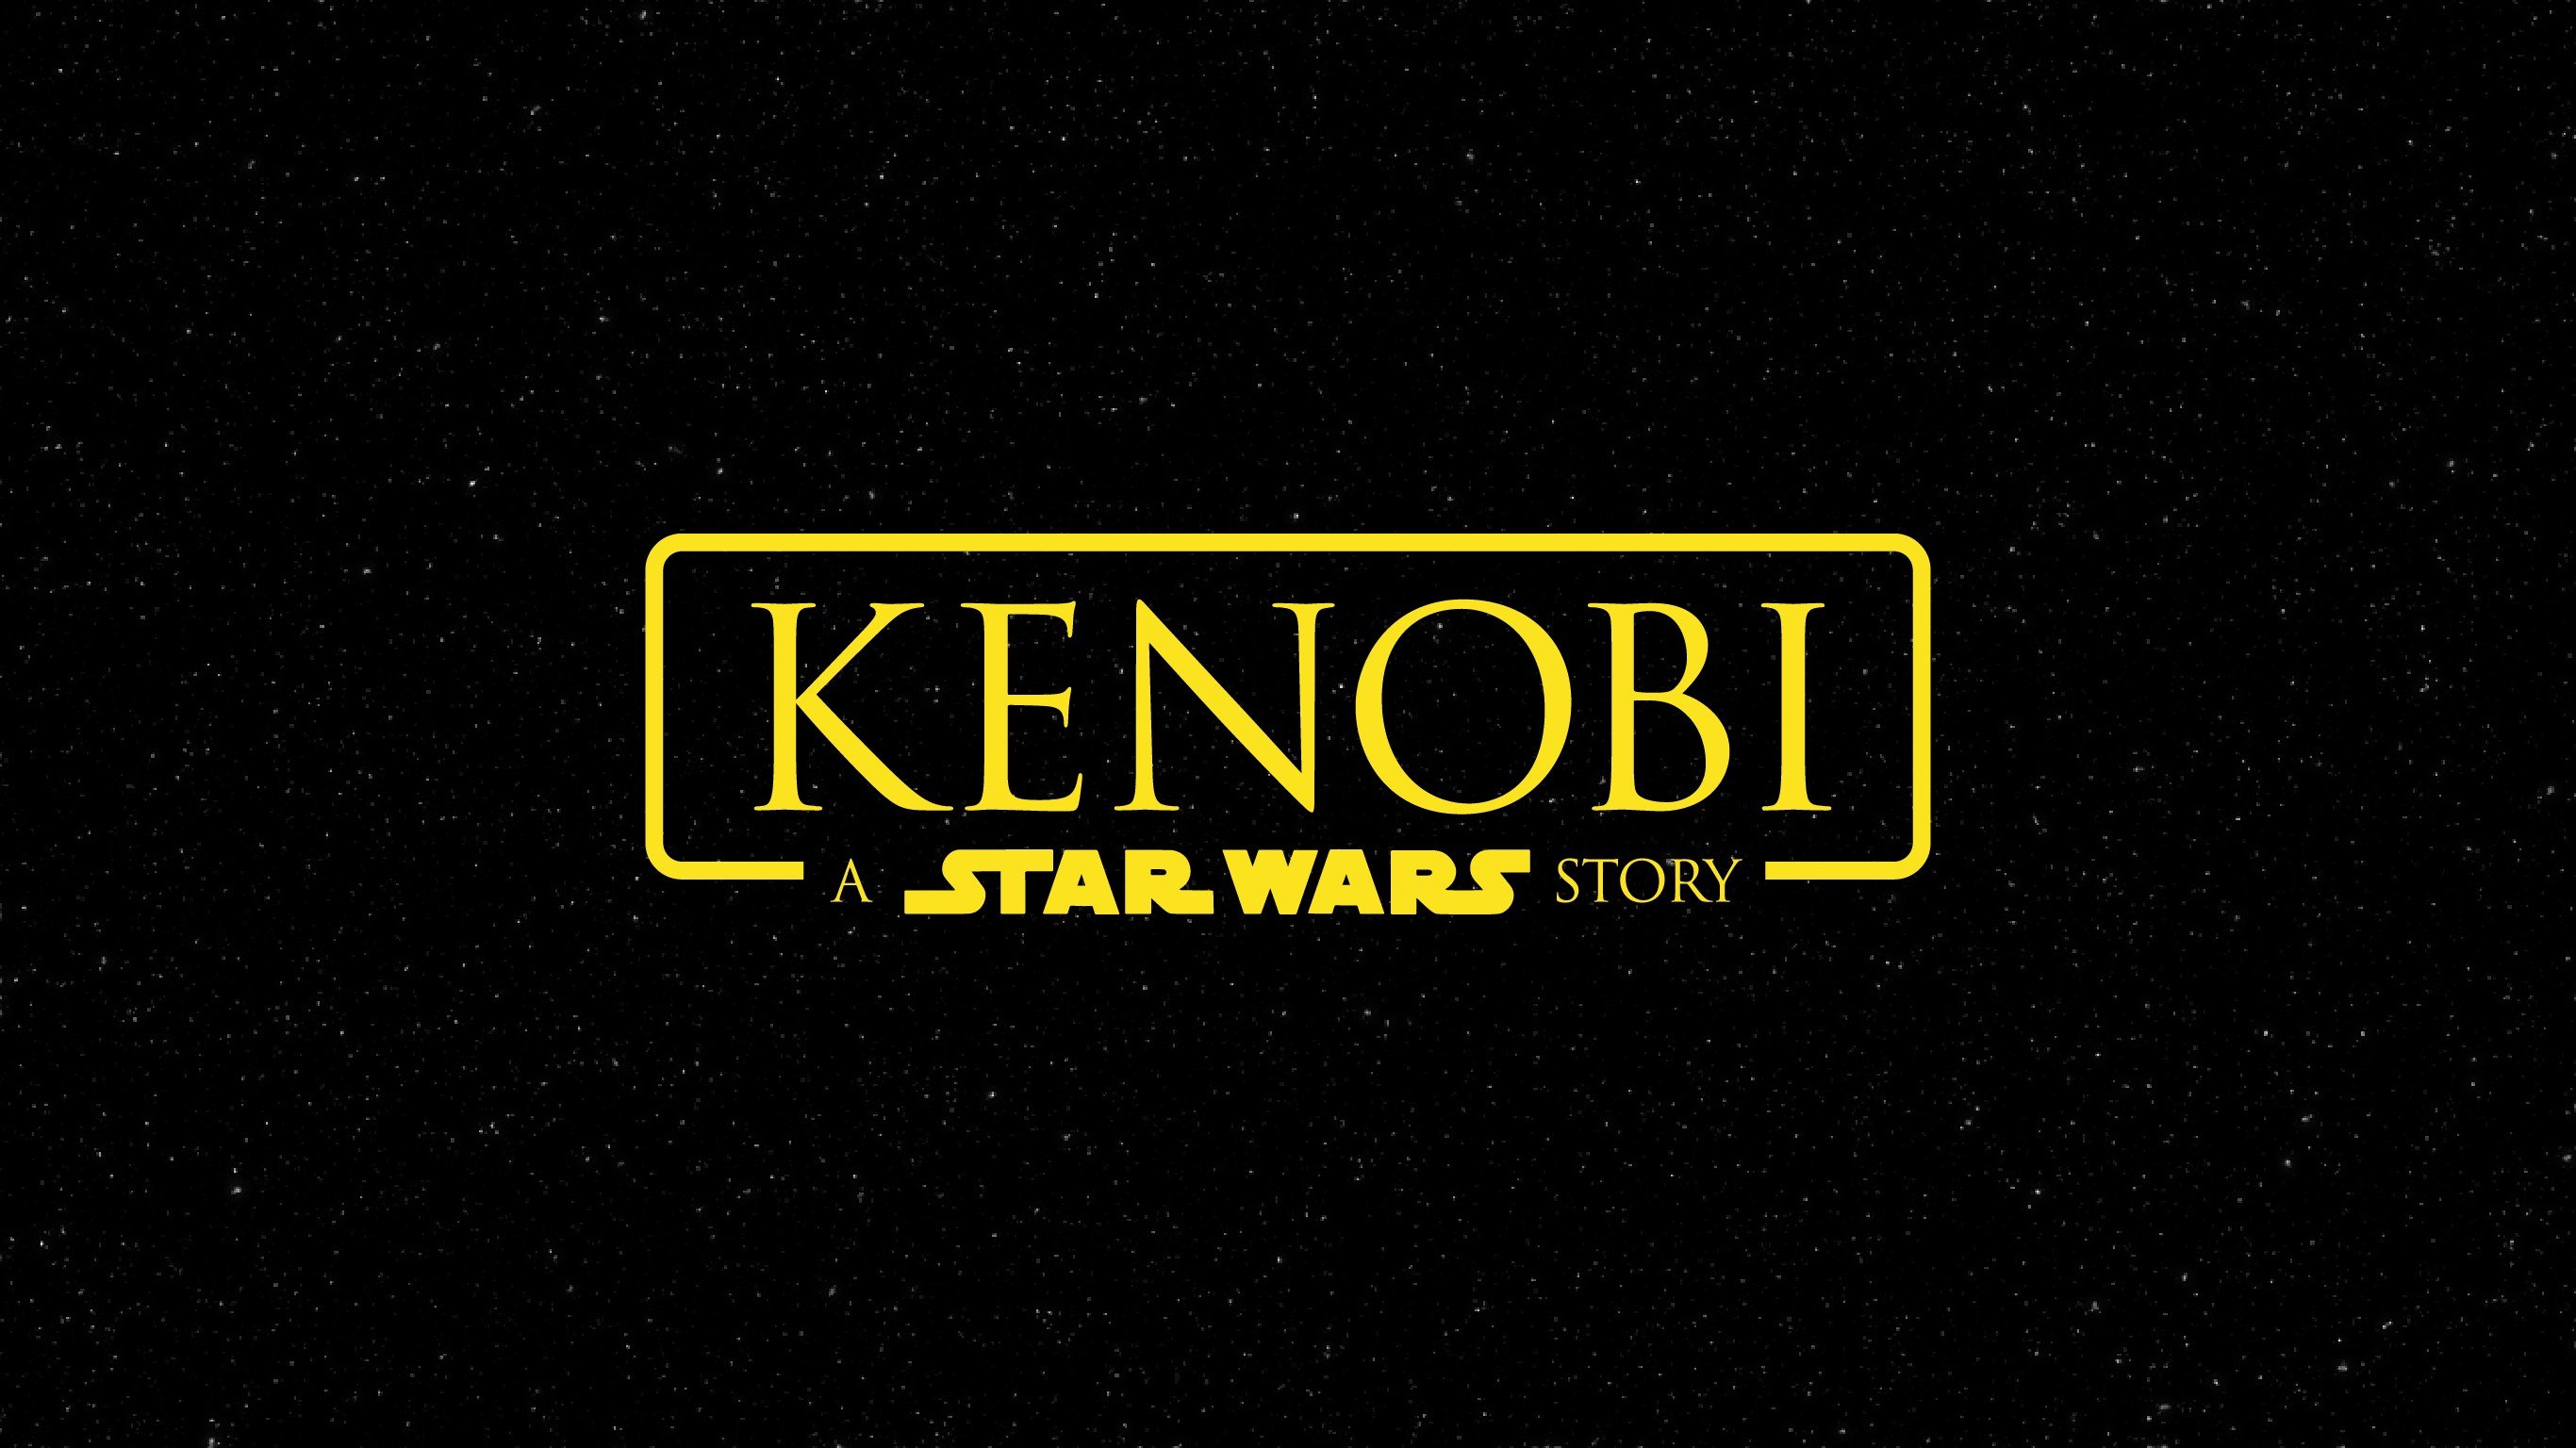 Obi Wan Kenobi Star Wars Hd Wallpapers Desktop And Mobile Images Photos